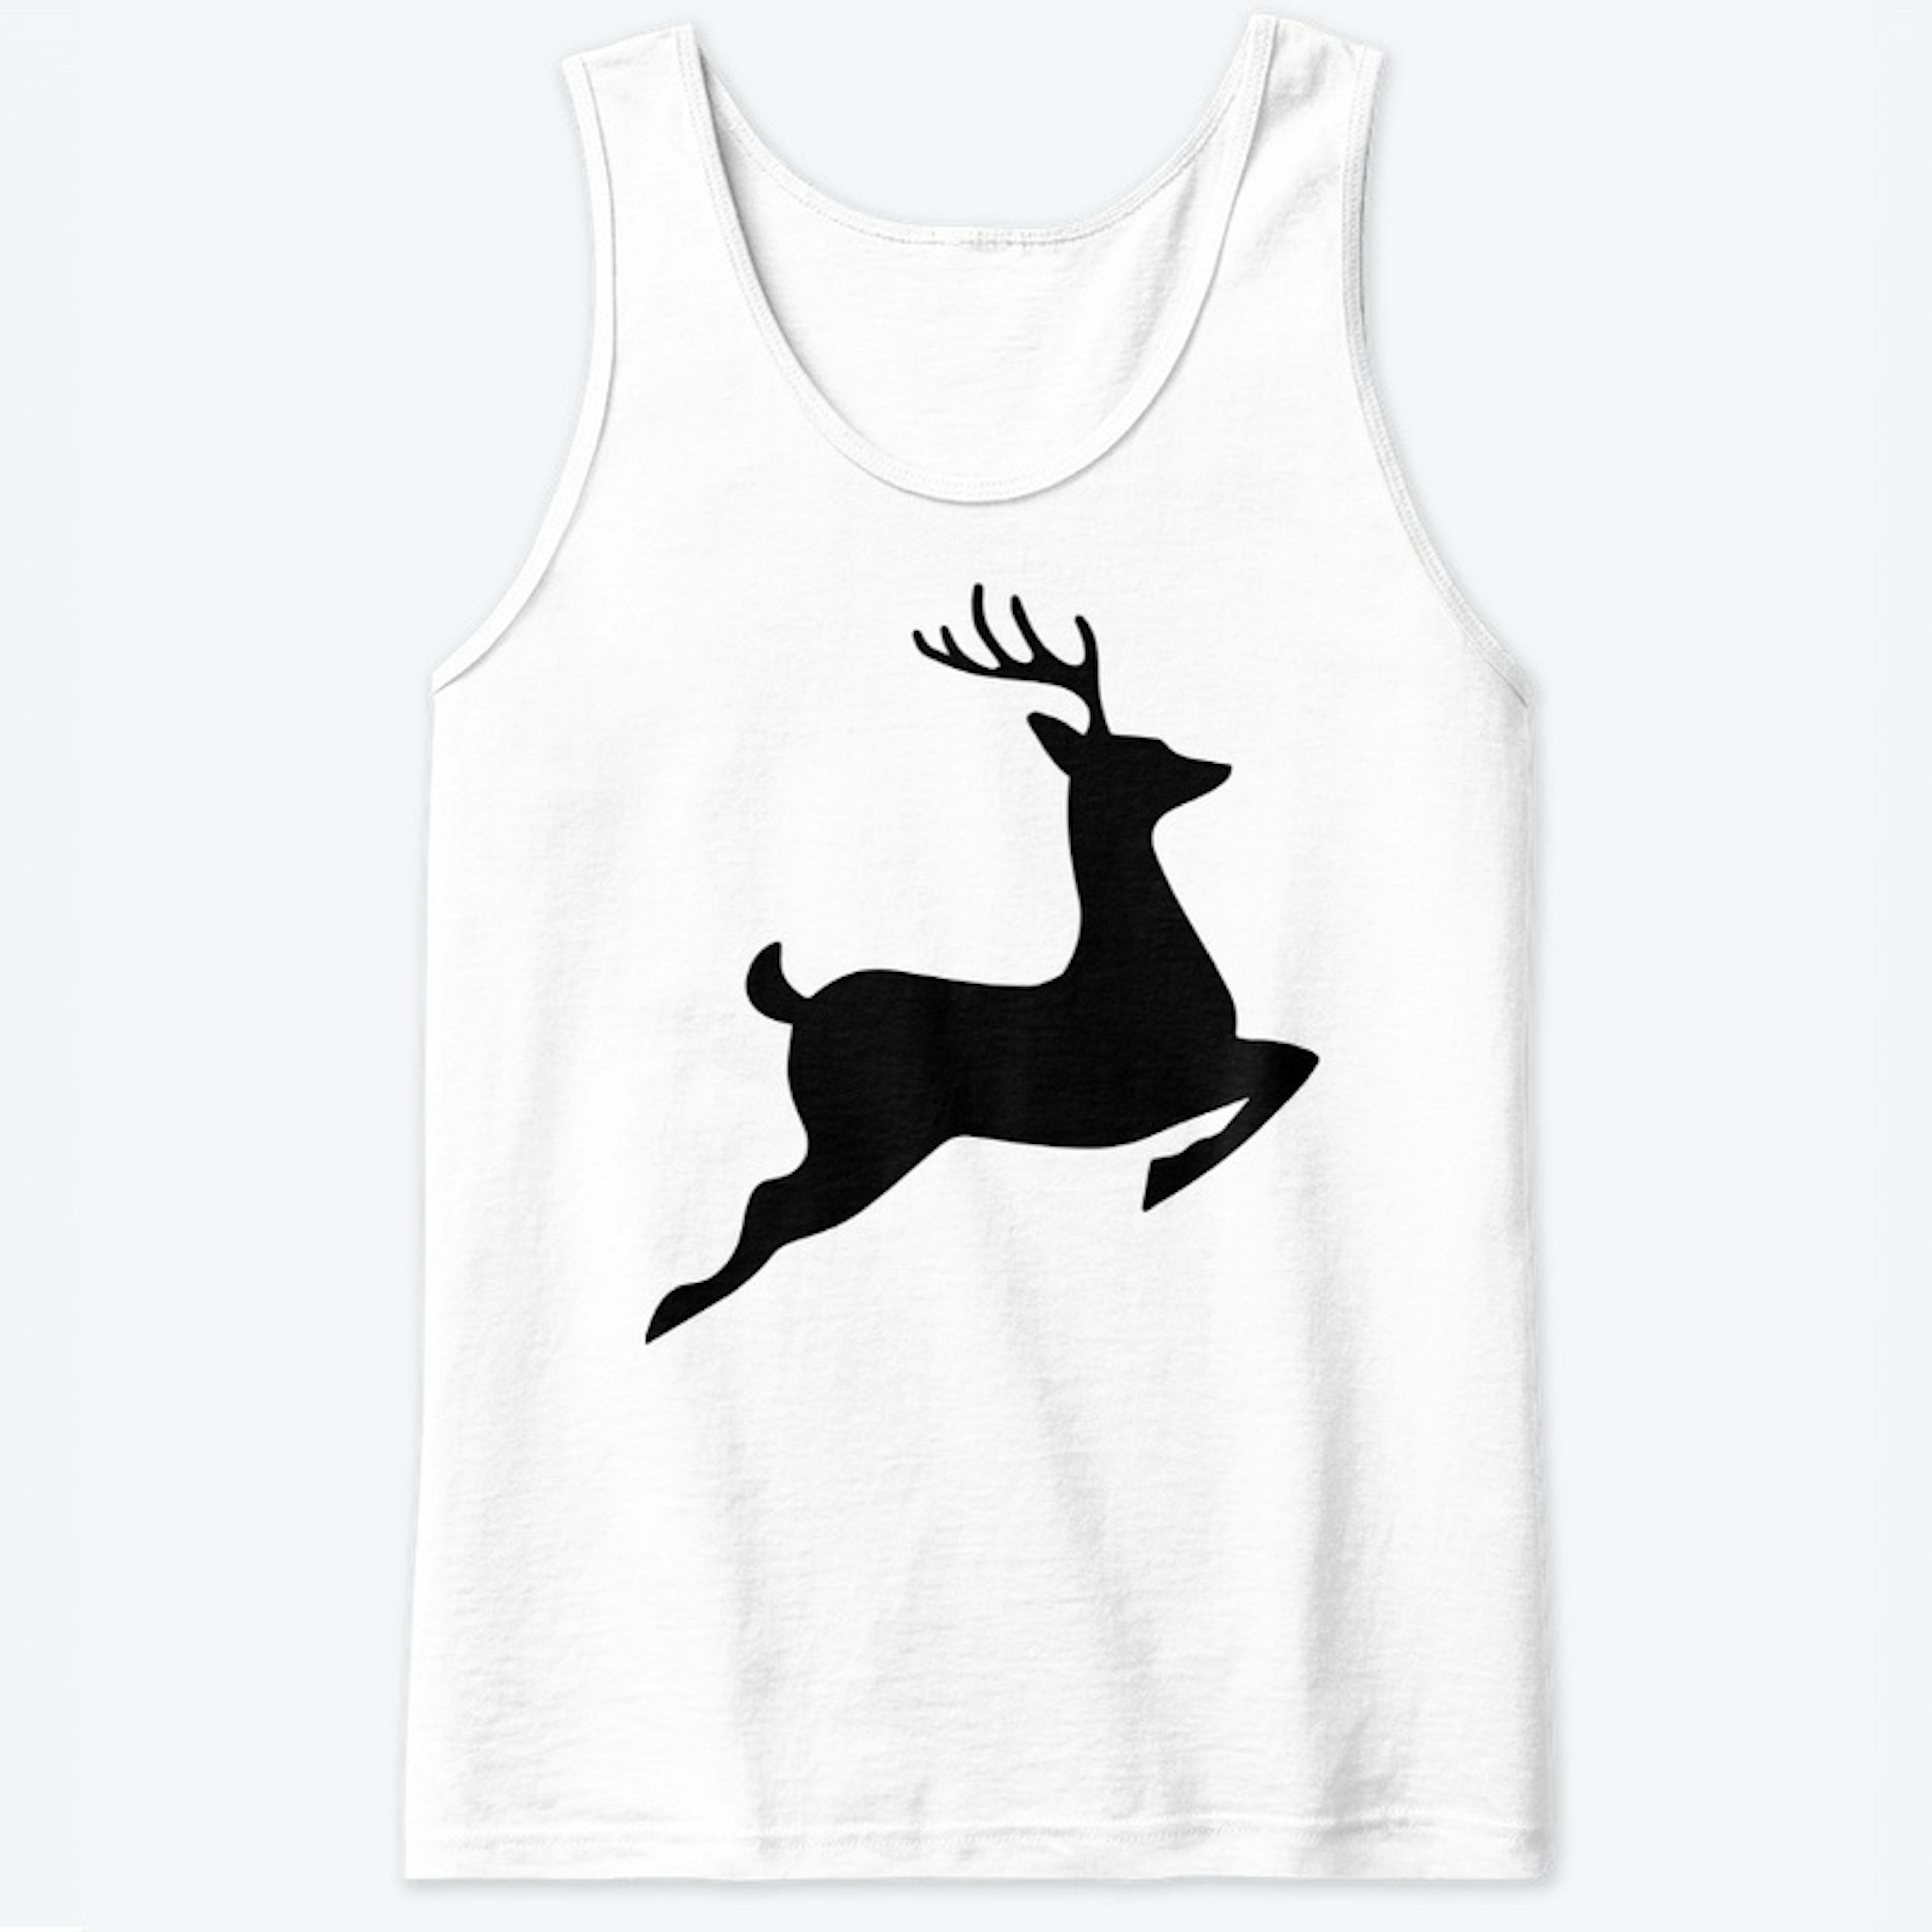 The Deer clothing